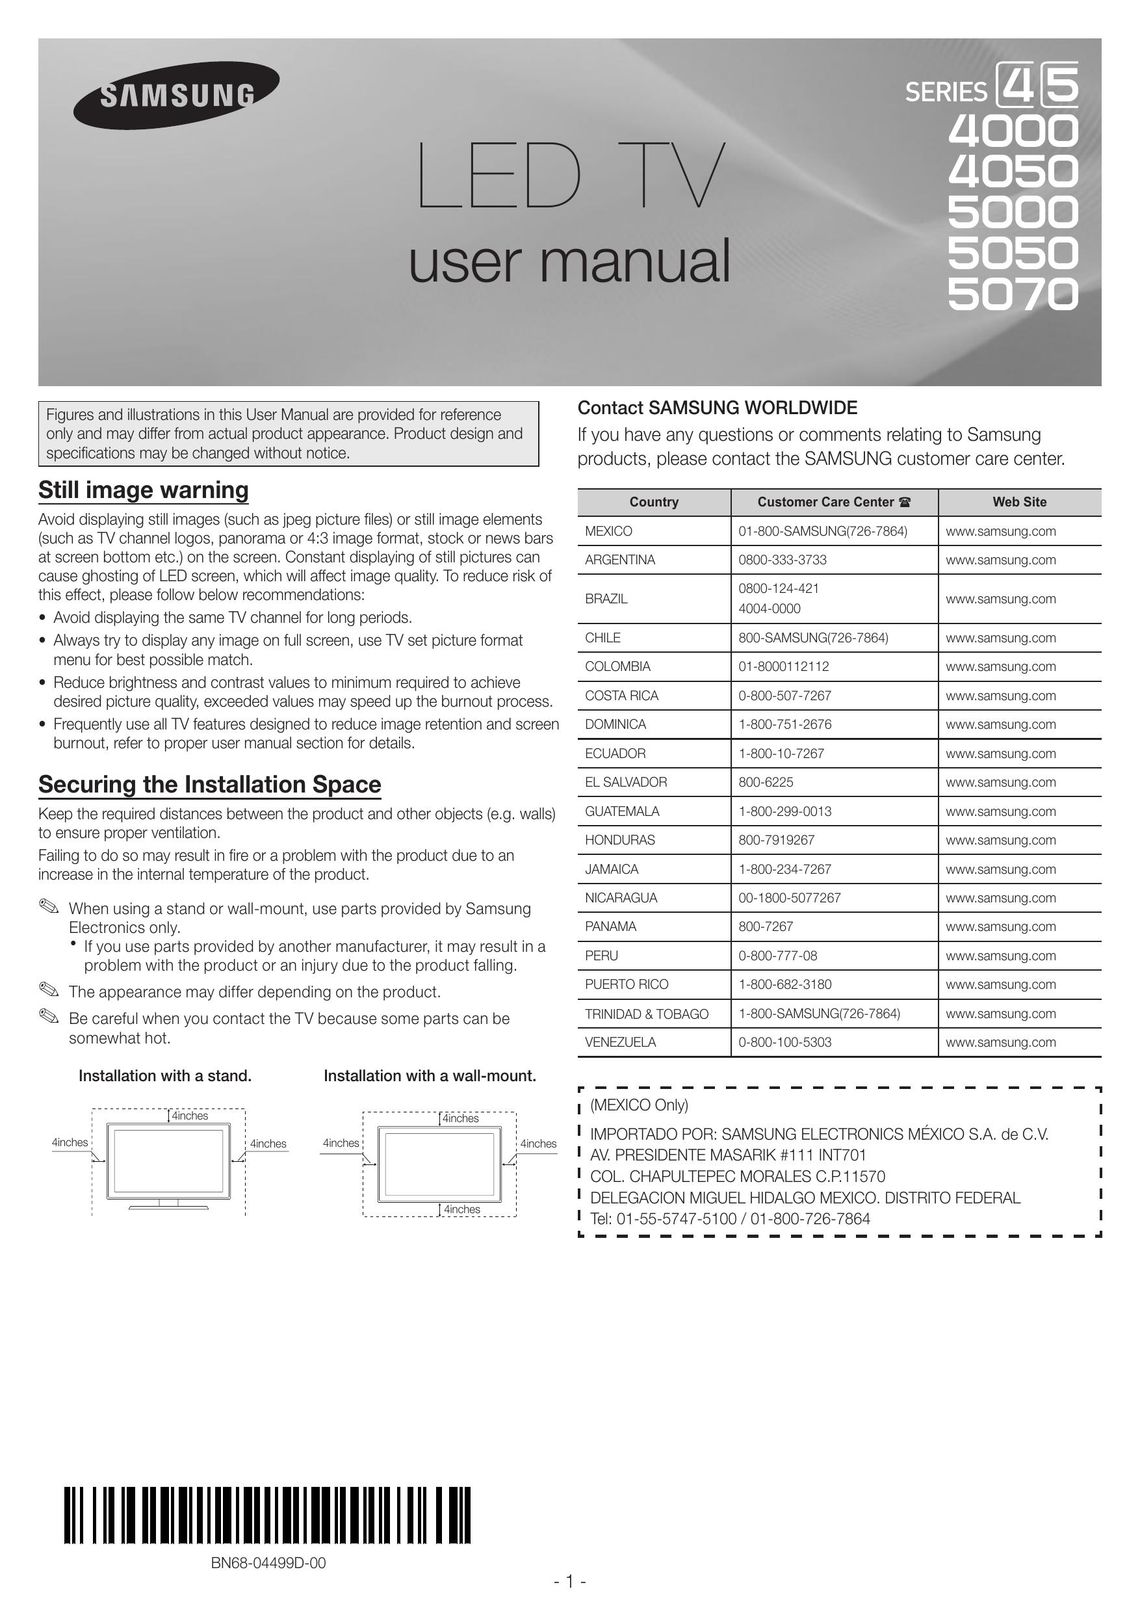 Samsung 4050 Model Vehicle User Manual